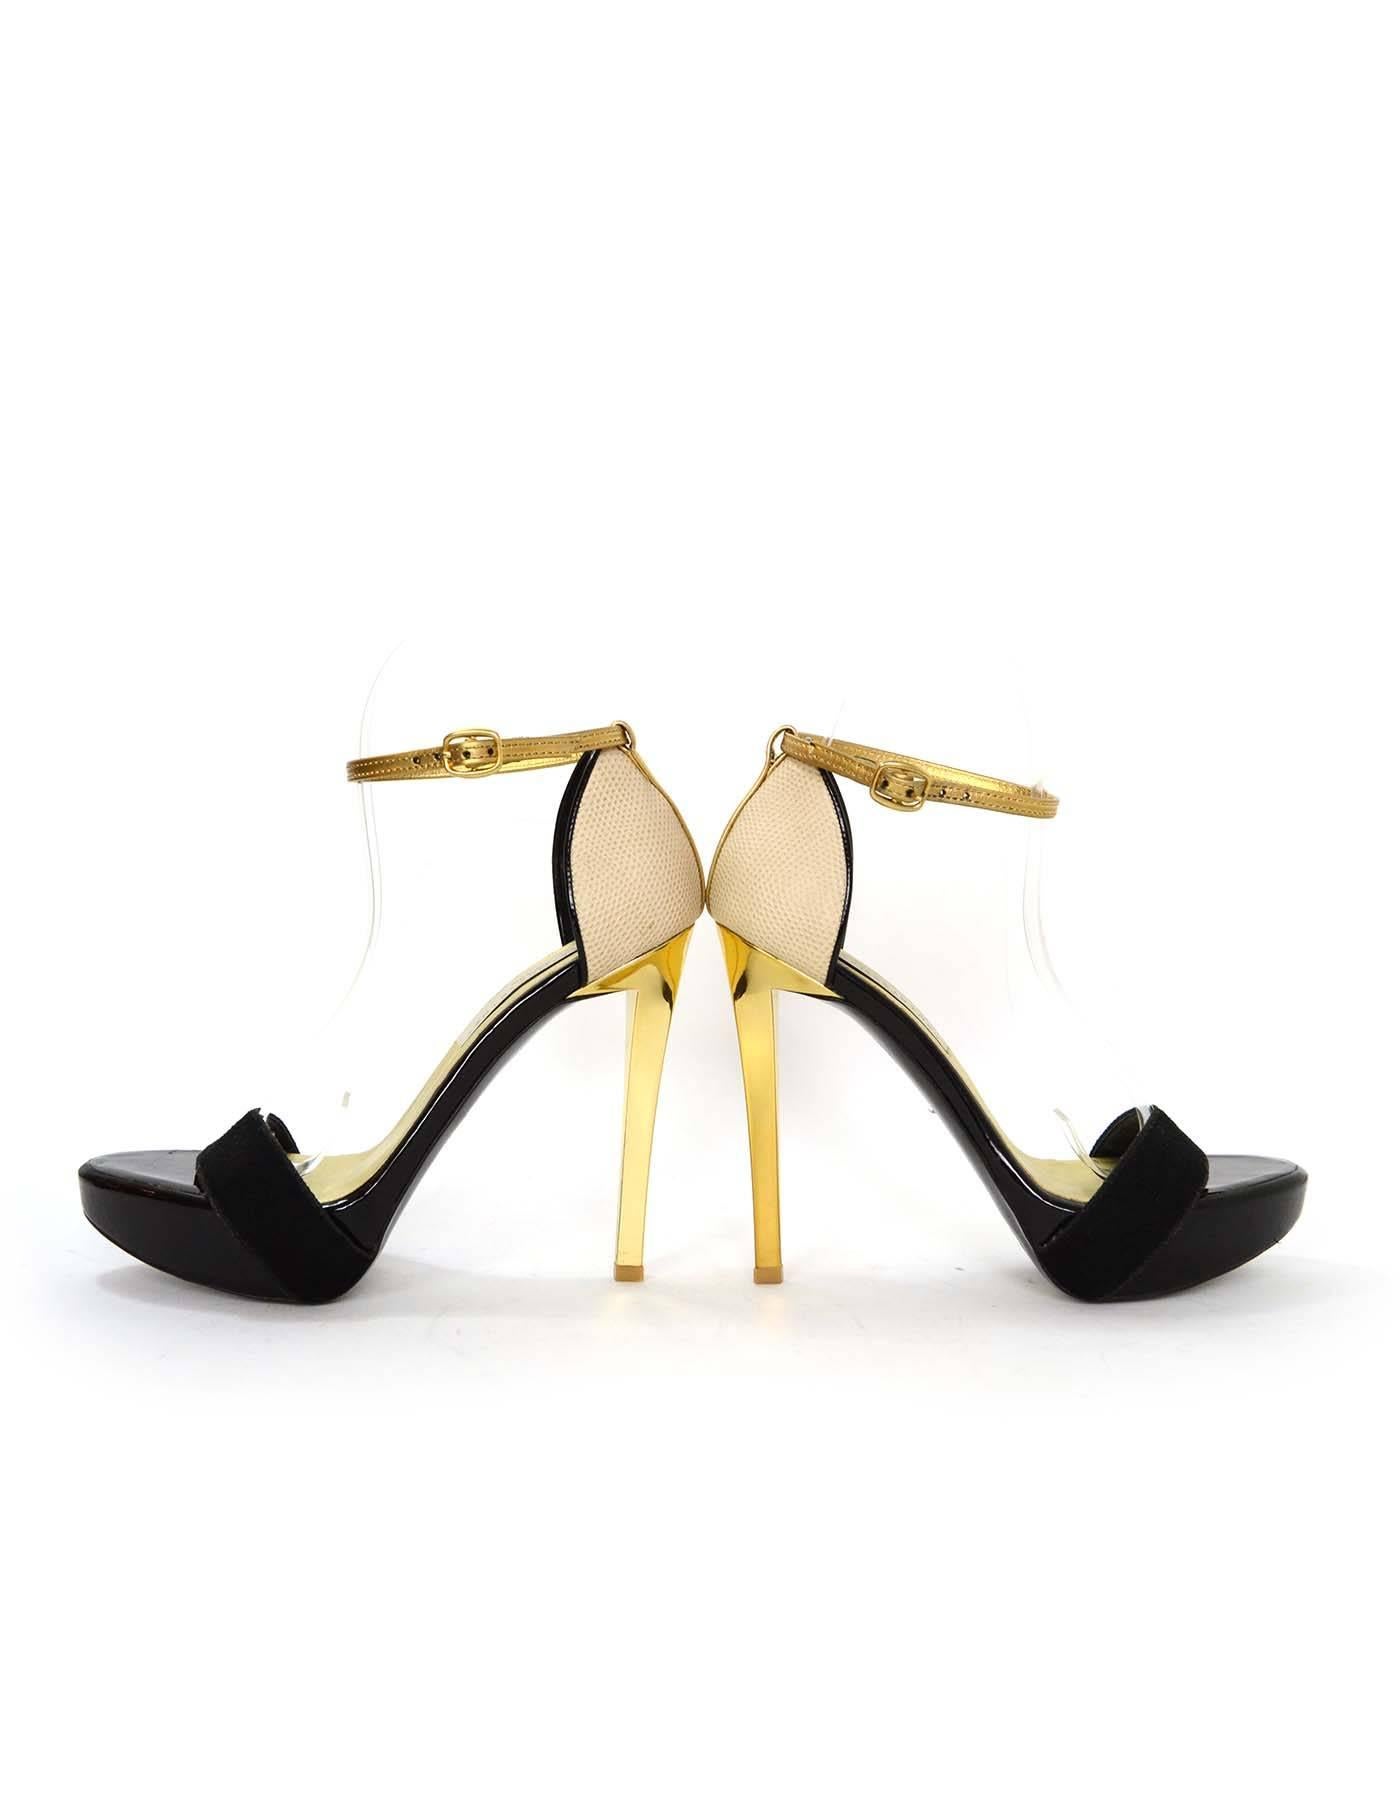 Stella McCartney Black & Gold Platform Sandals sz 36 2